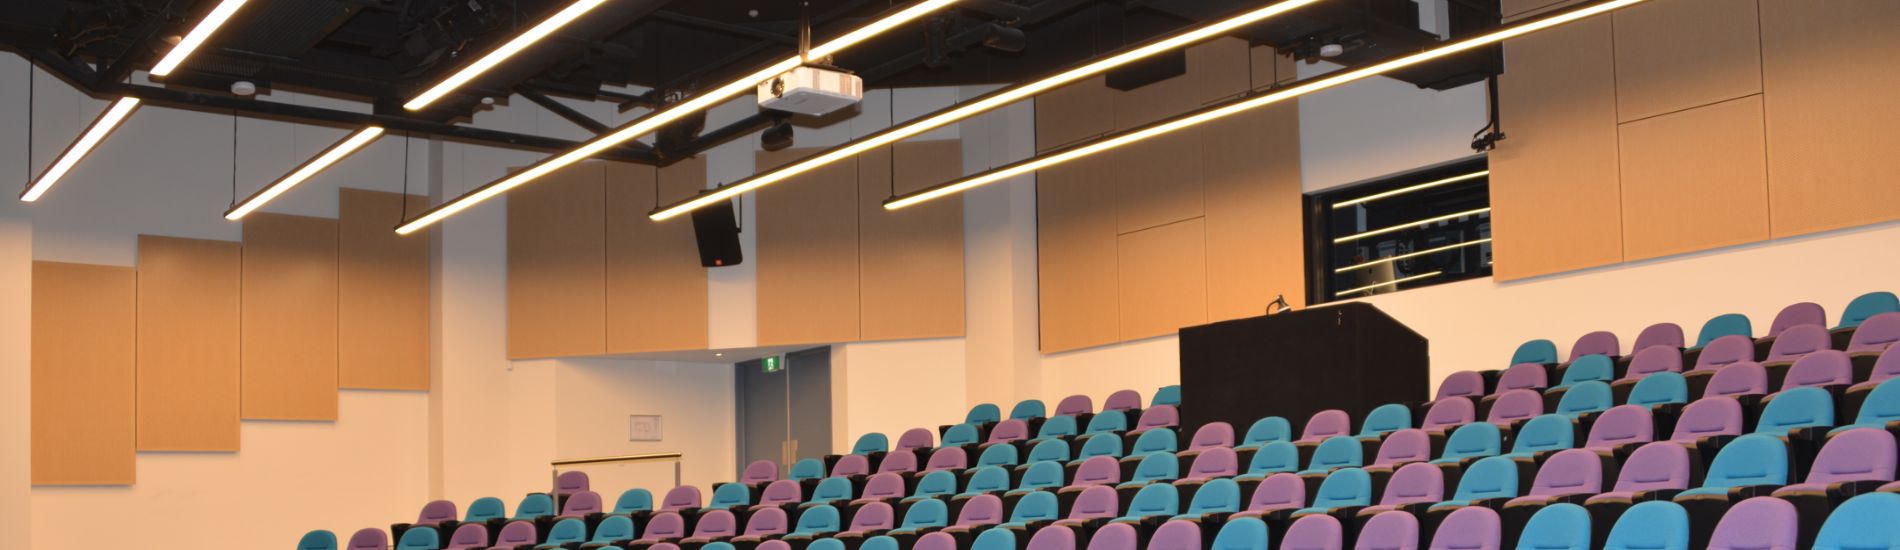 SUPACOUSTIC noise control kit panels an economic solution for theatre refurbishment